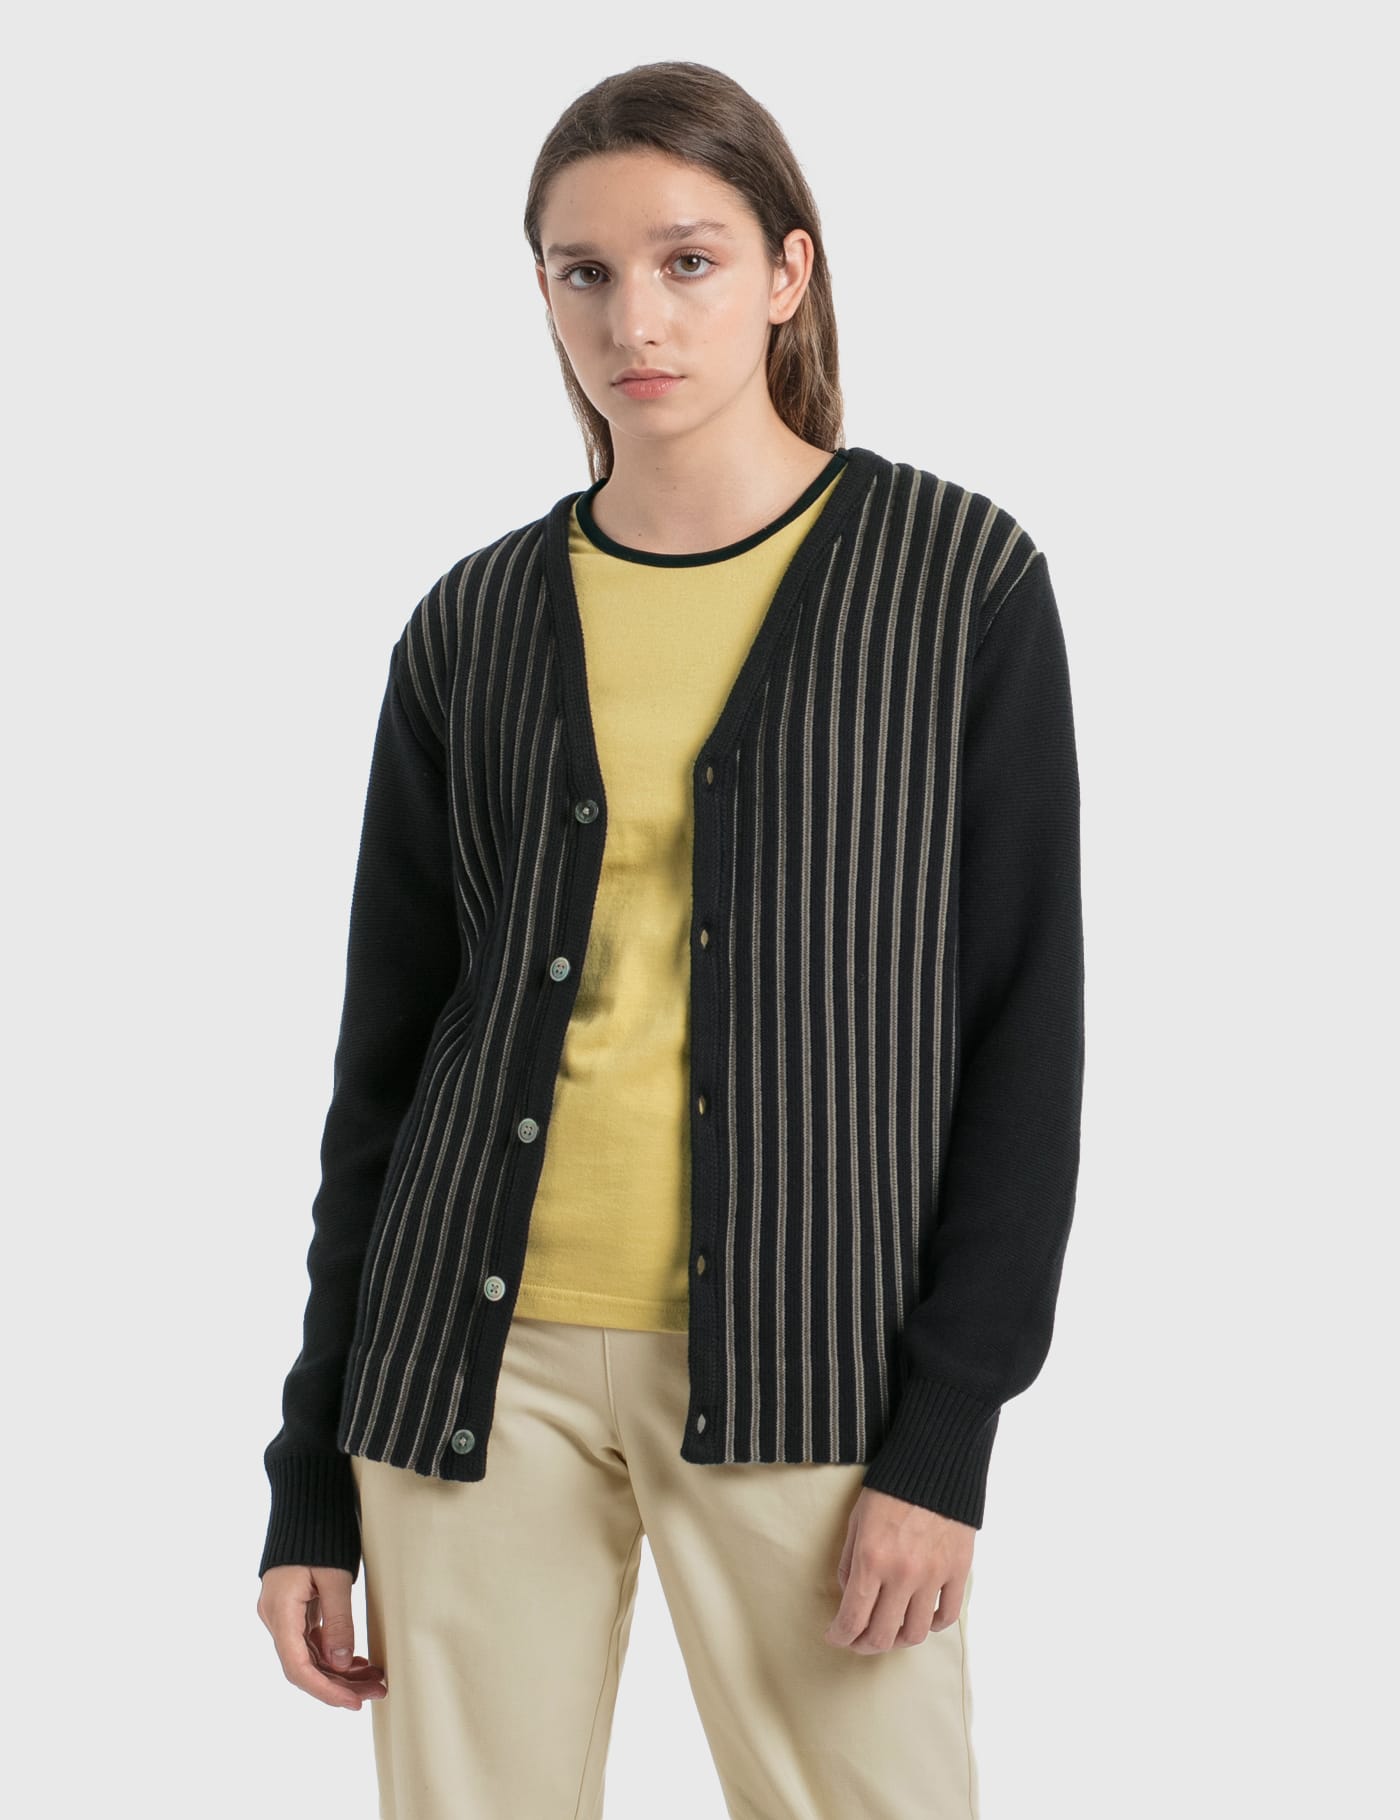 Stüssy - Stripe Cardigan | HBX - Globally Curated Fashion and 